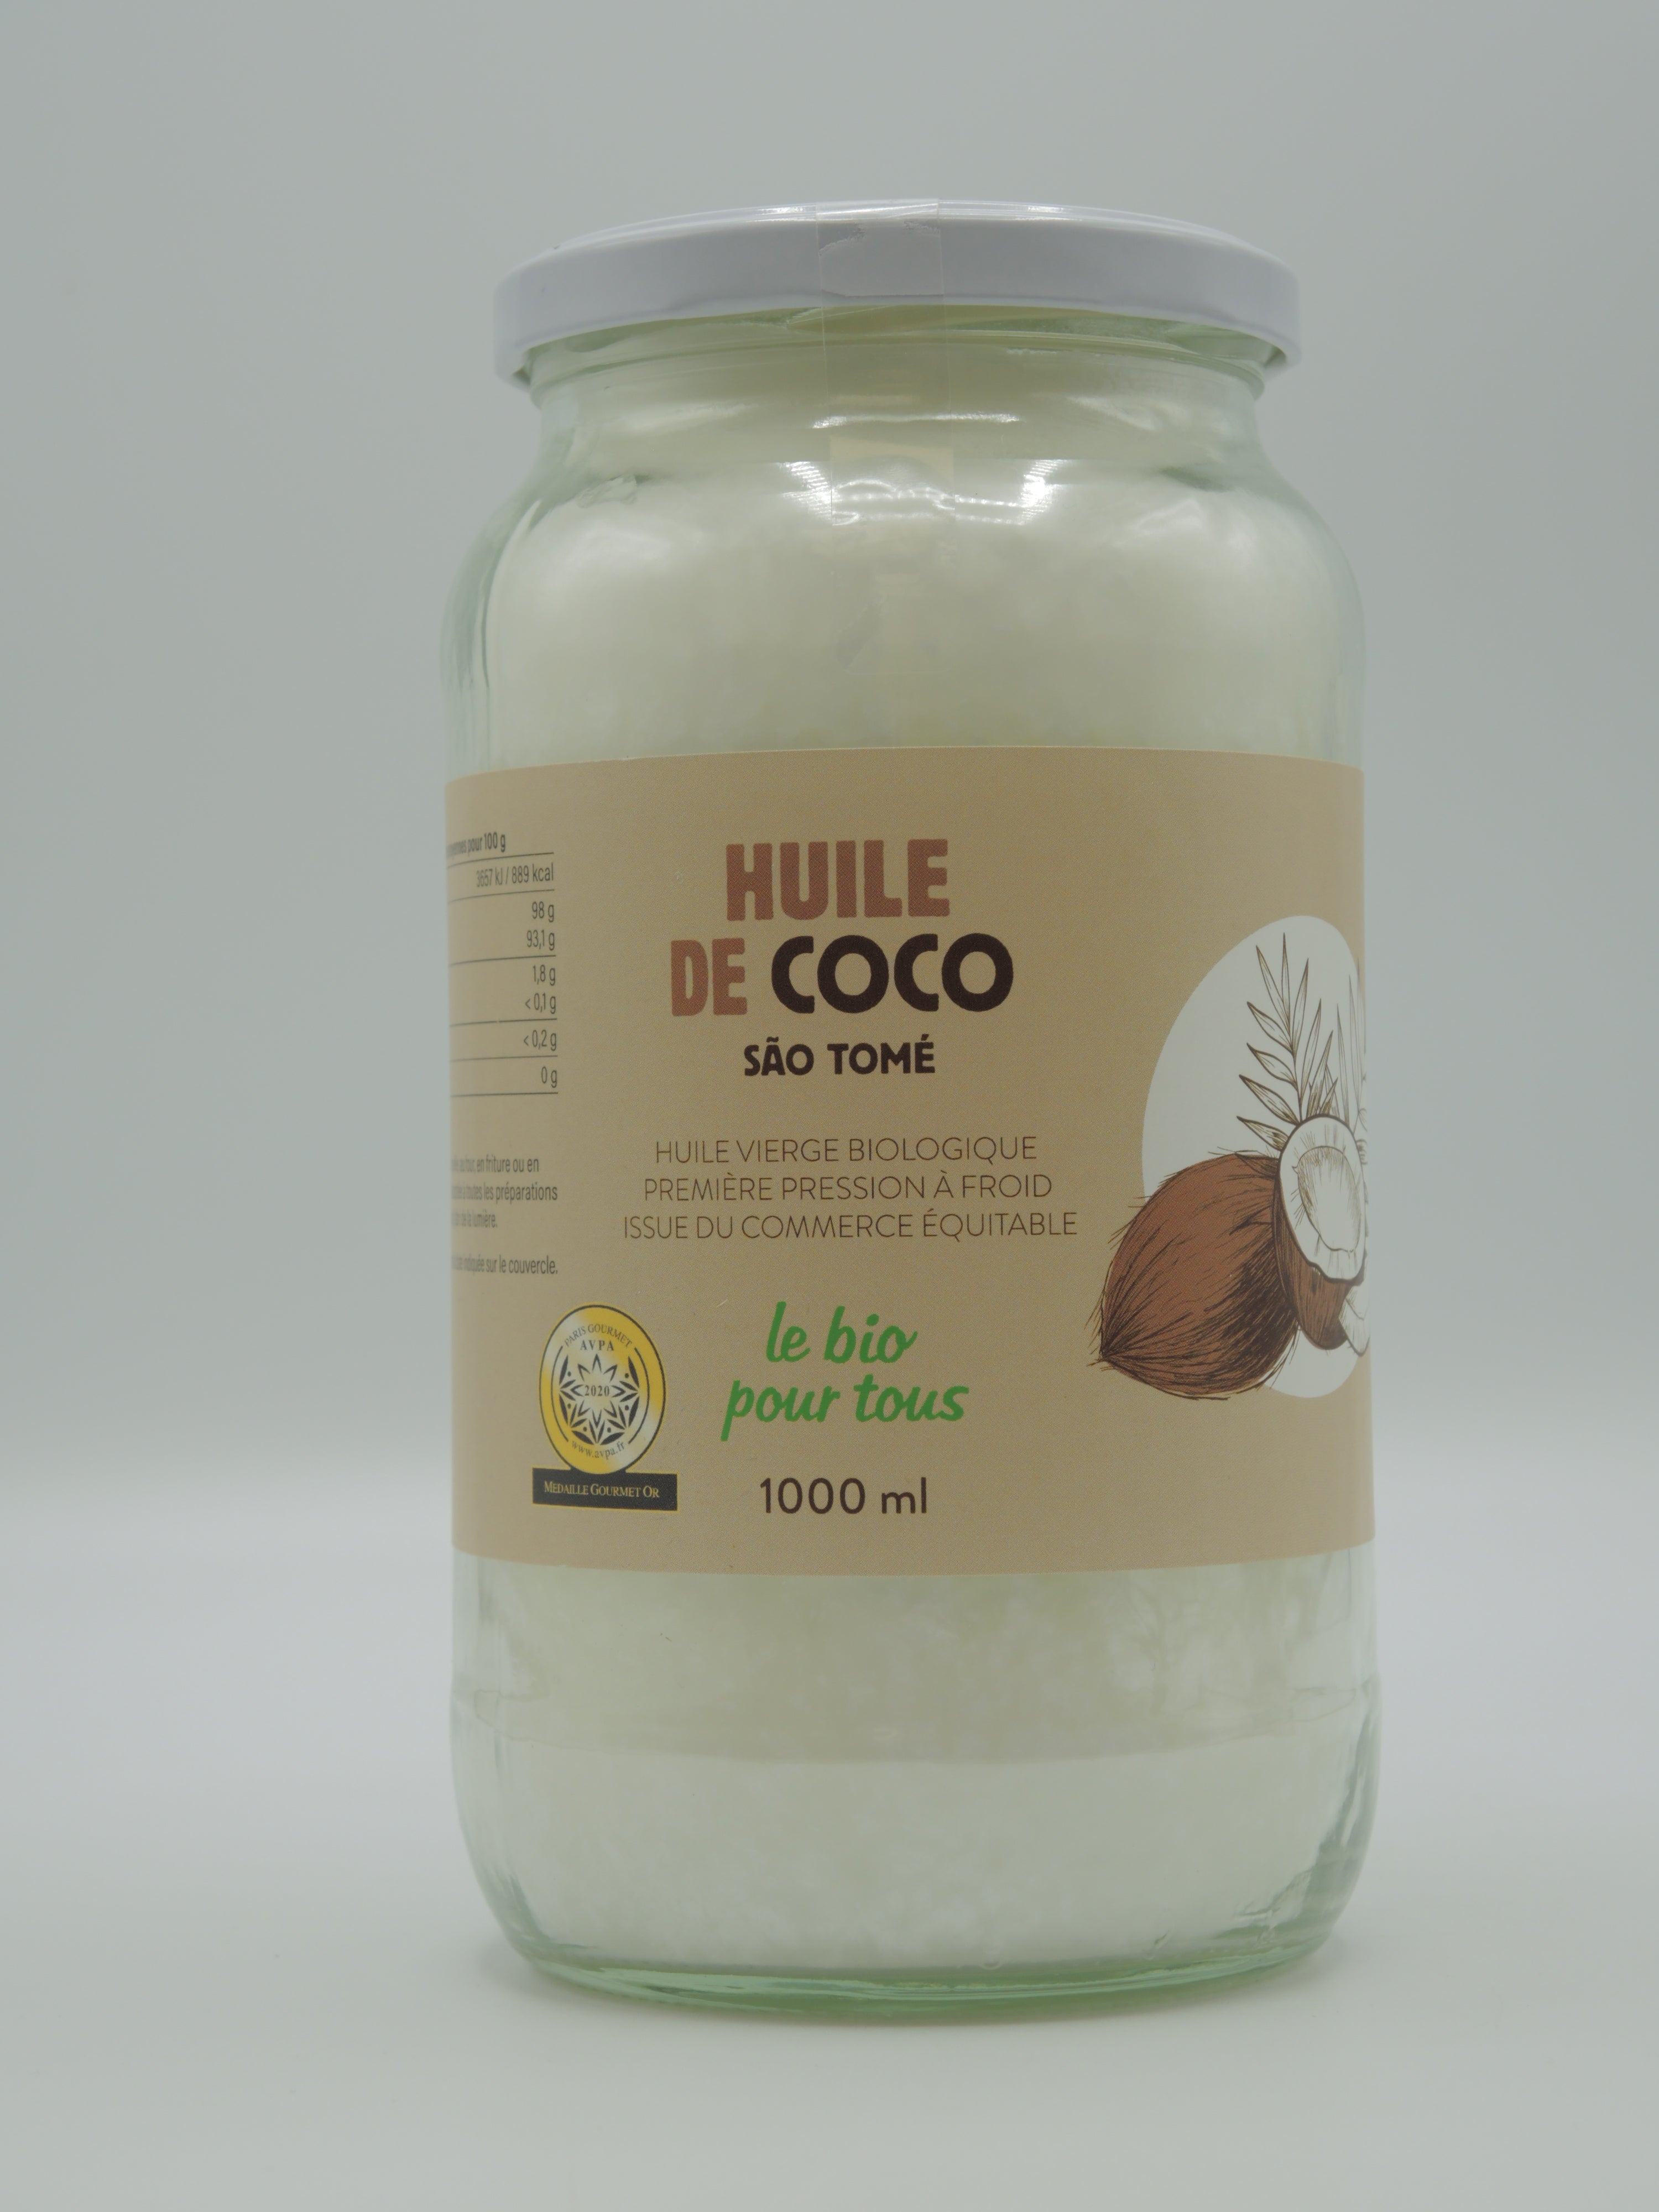 PERLE DE COCO Huile de coco vierge certifiée bio, 250ml